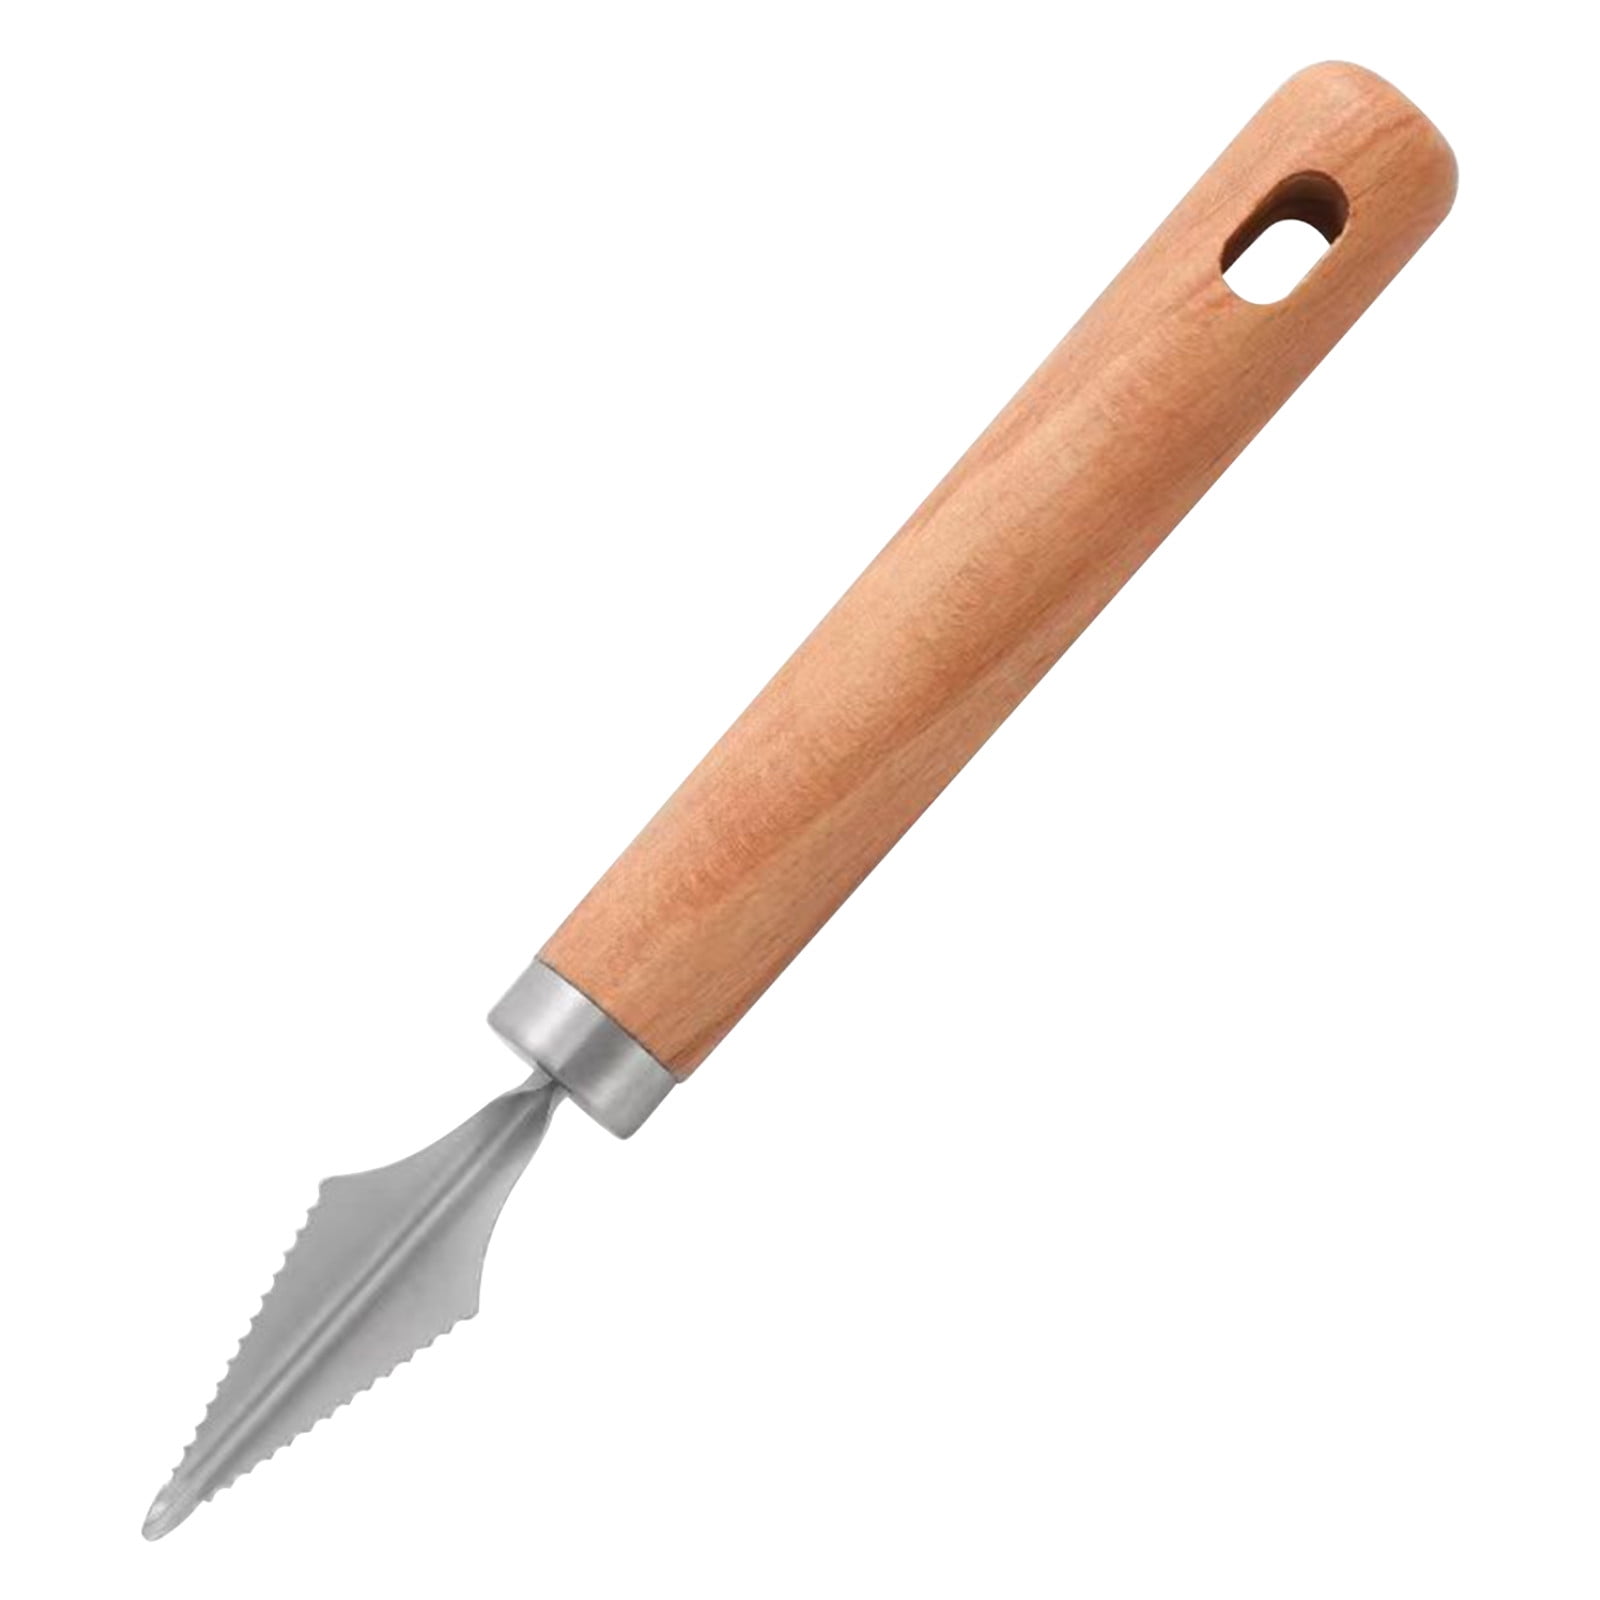 Klyuqoz Fruit Carving Tools, Fruit Carving Knife Set of 4, Stainless Steel  Apple Corer, Melon Baller Scoop DIY Carving Knives for Home Kitchen